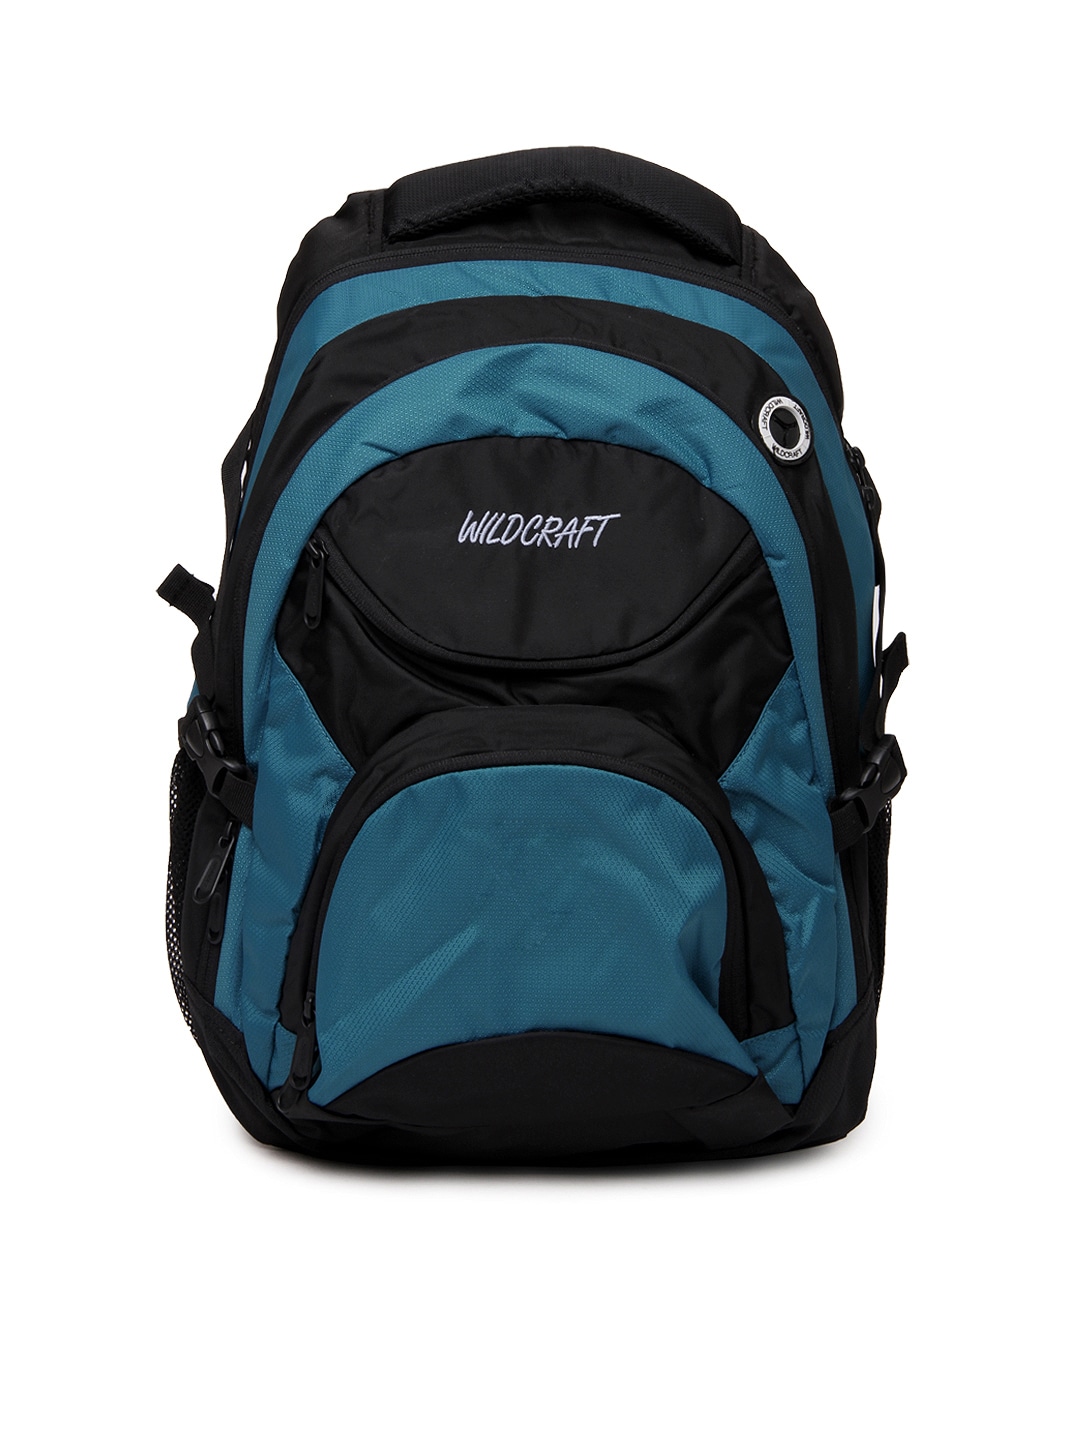 Wildcraft Unisex Blue & Black Backpack